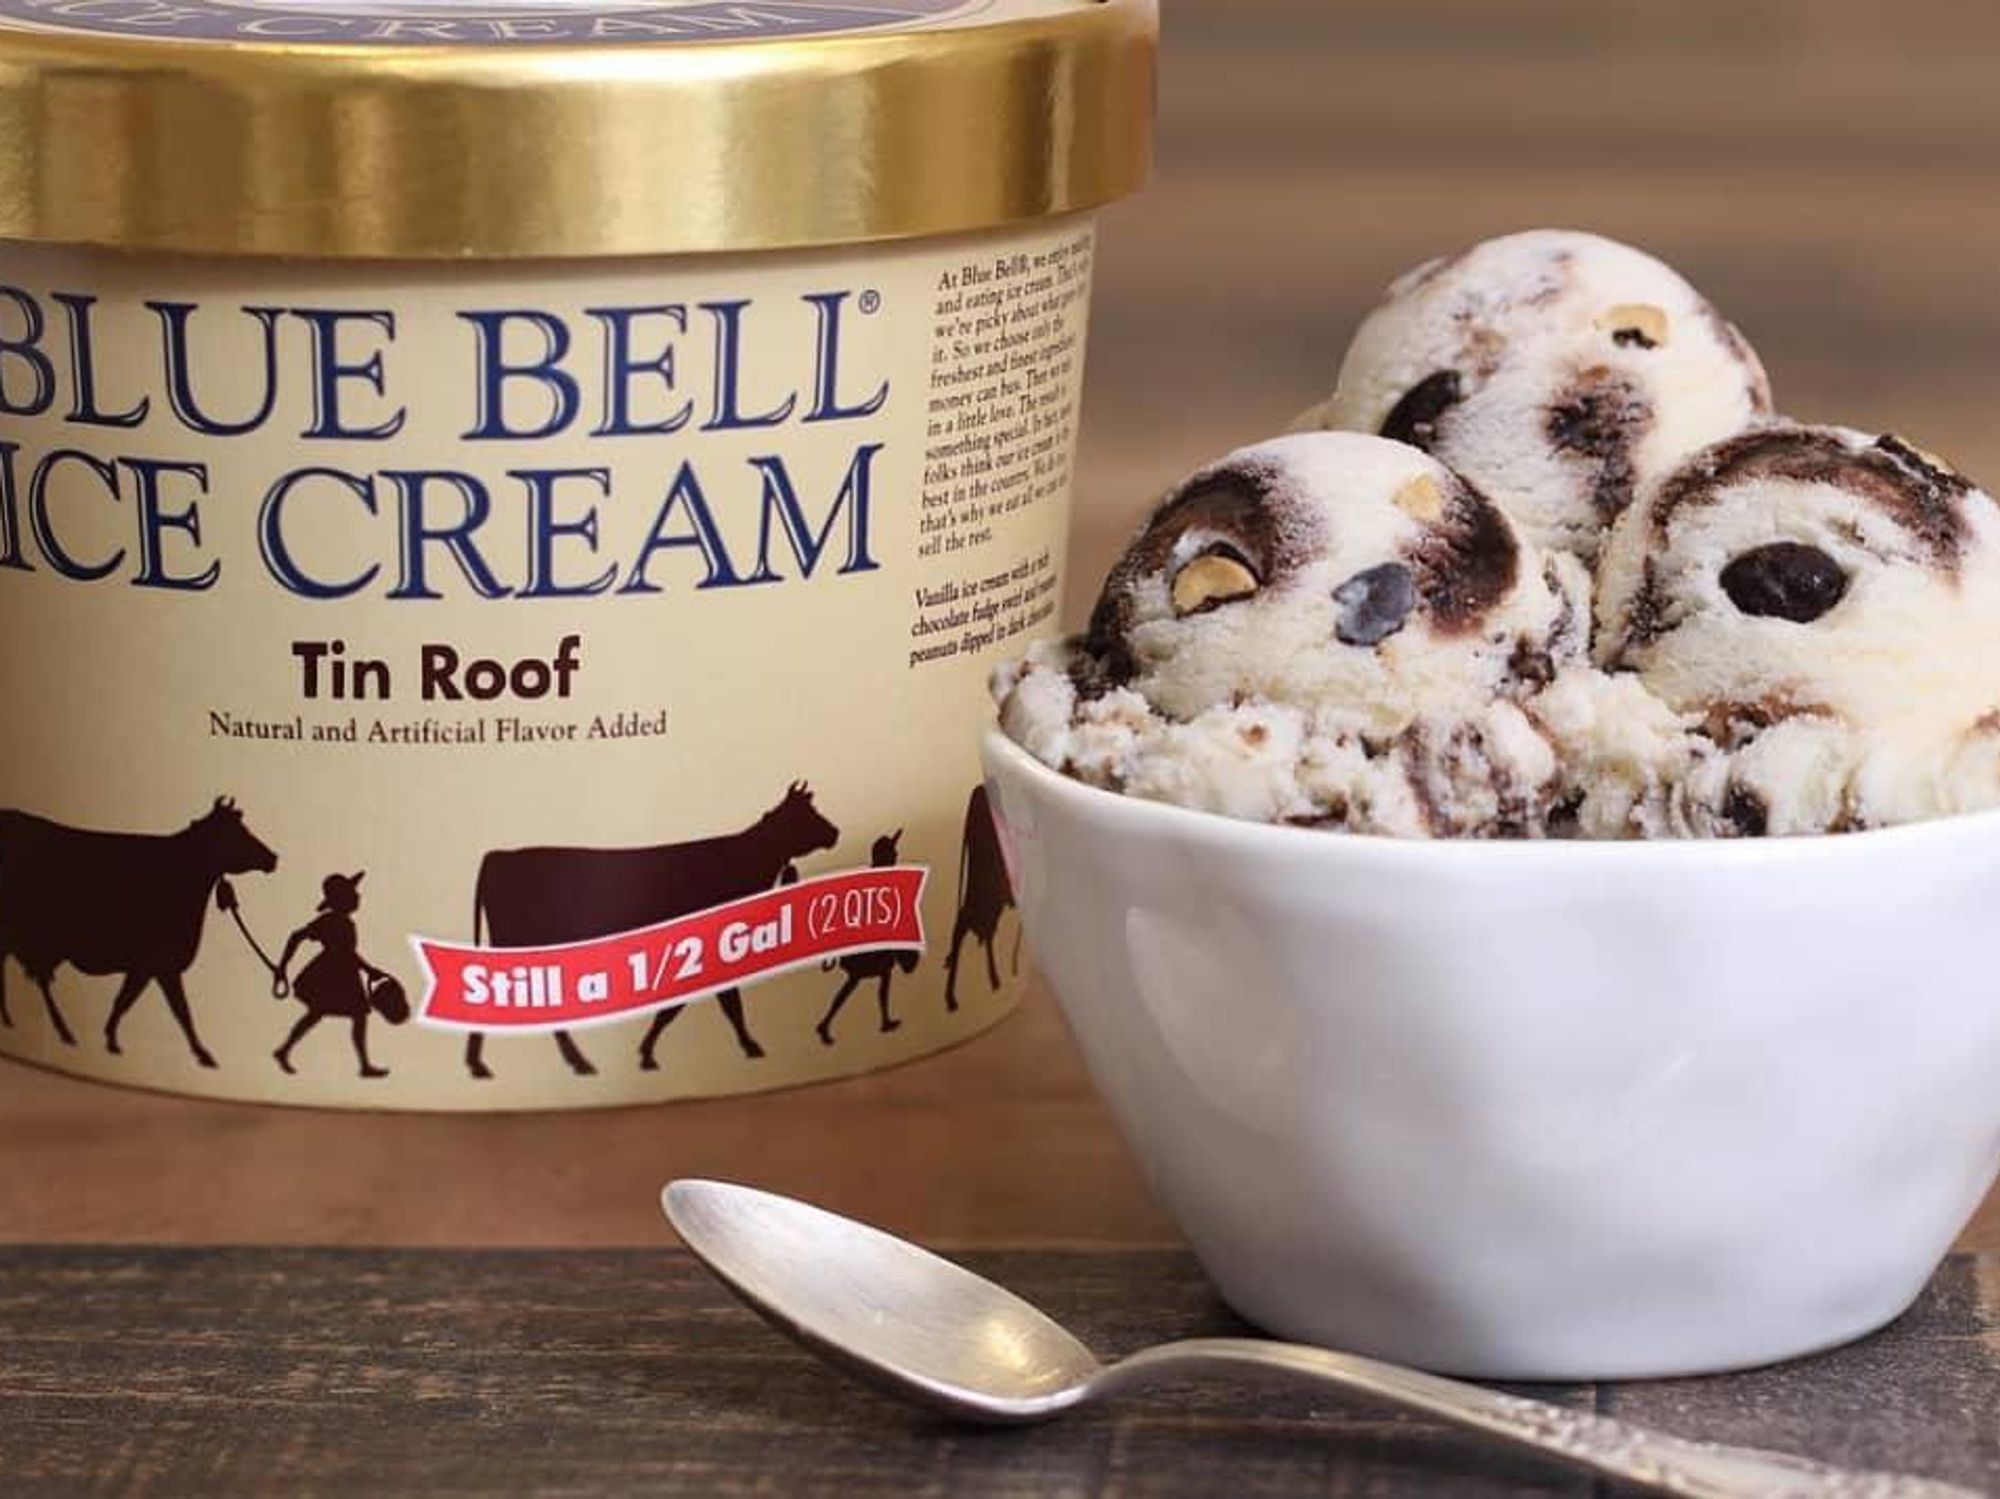 Blue Bell Tin Roof ice cream